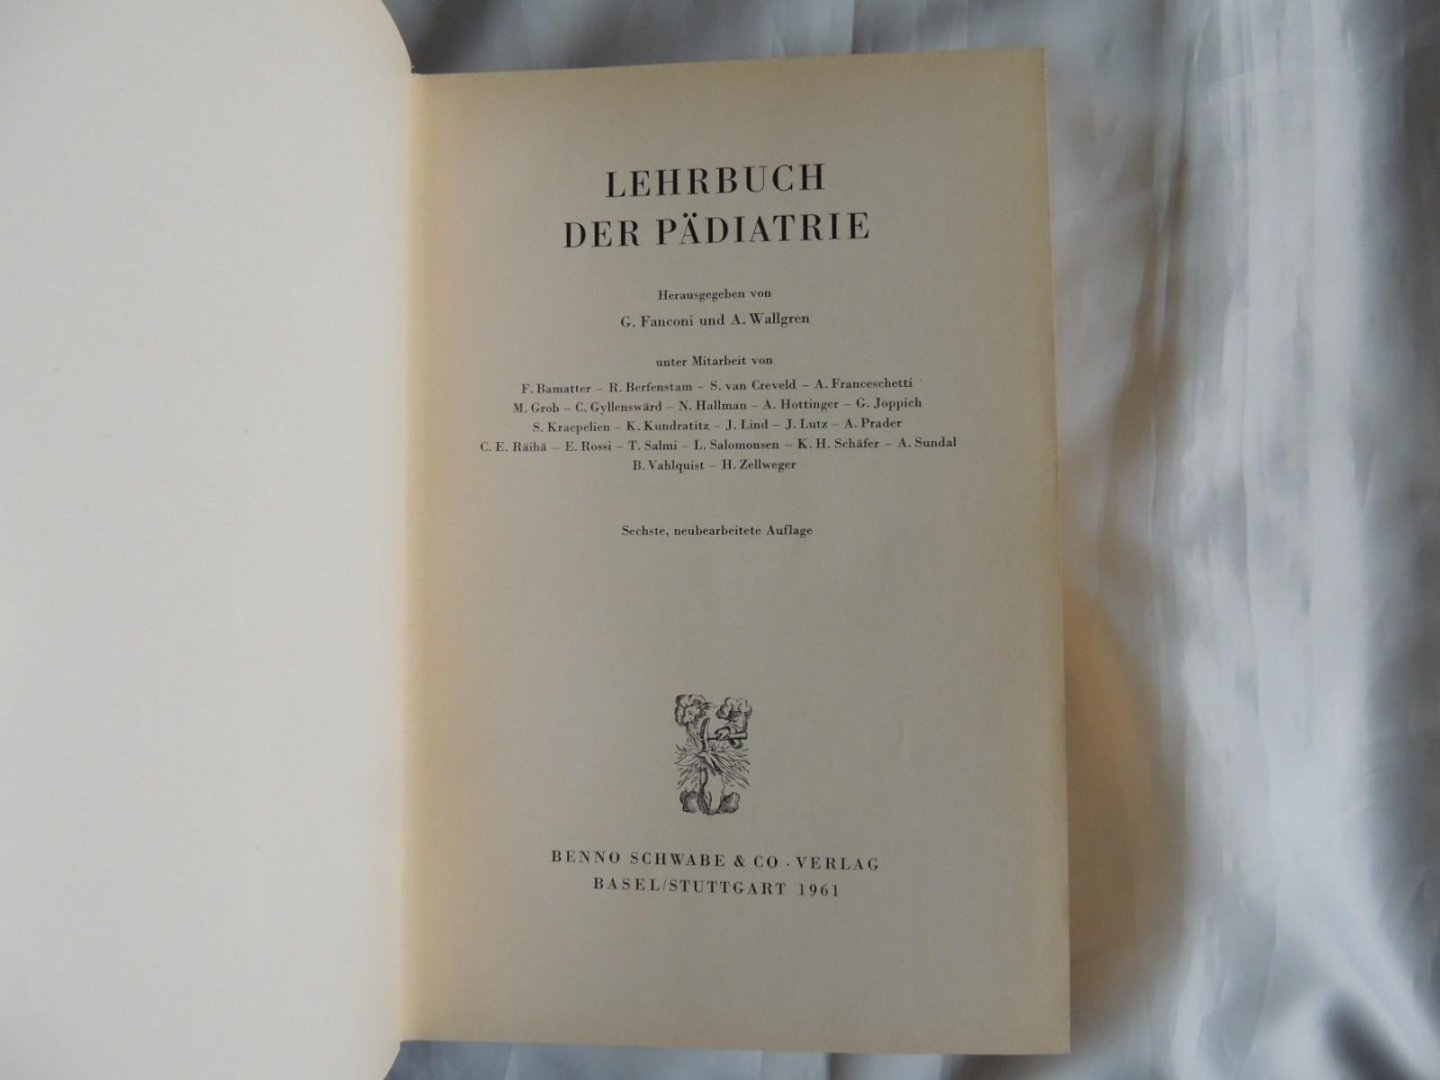 Fanconi, G. -  Wallgren, A. - Lehrbuch der padiatrie pädiatrie